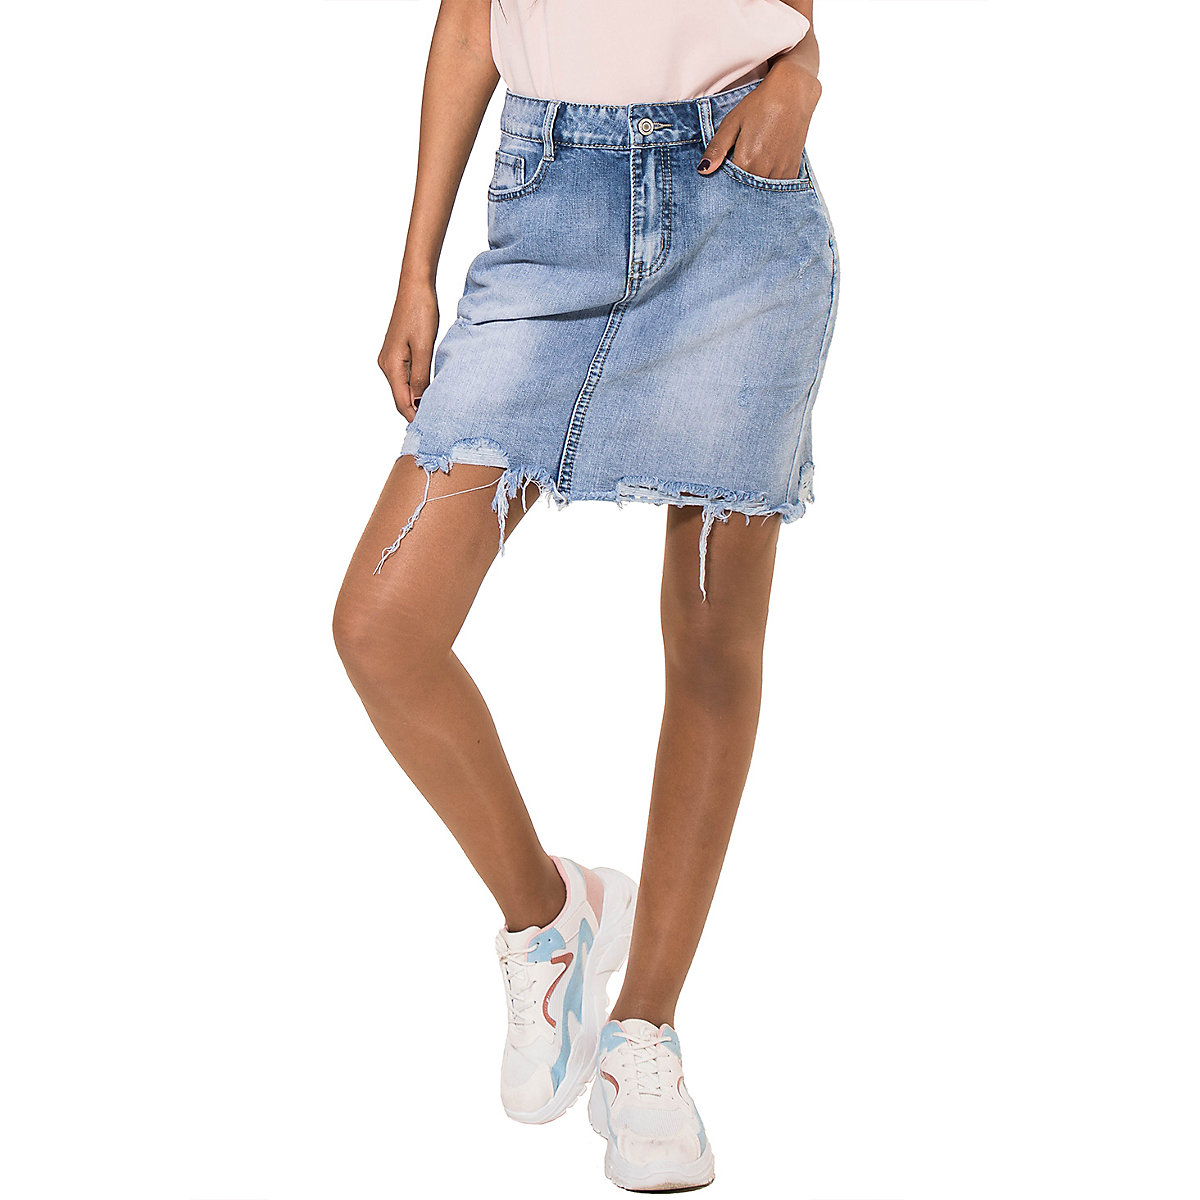 Simply Chic Fransen Jeans Rock Midi Skirt D2354 blau